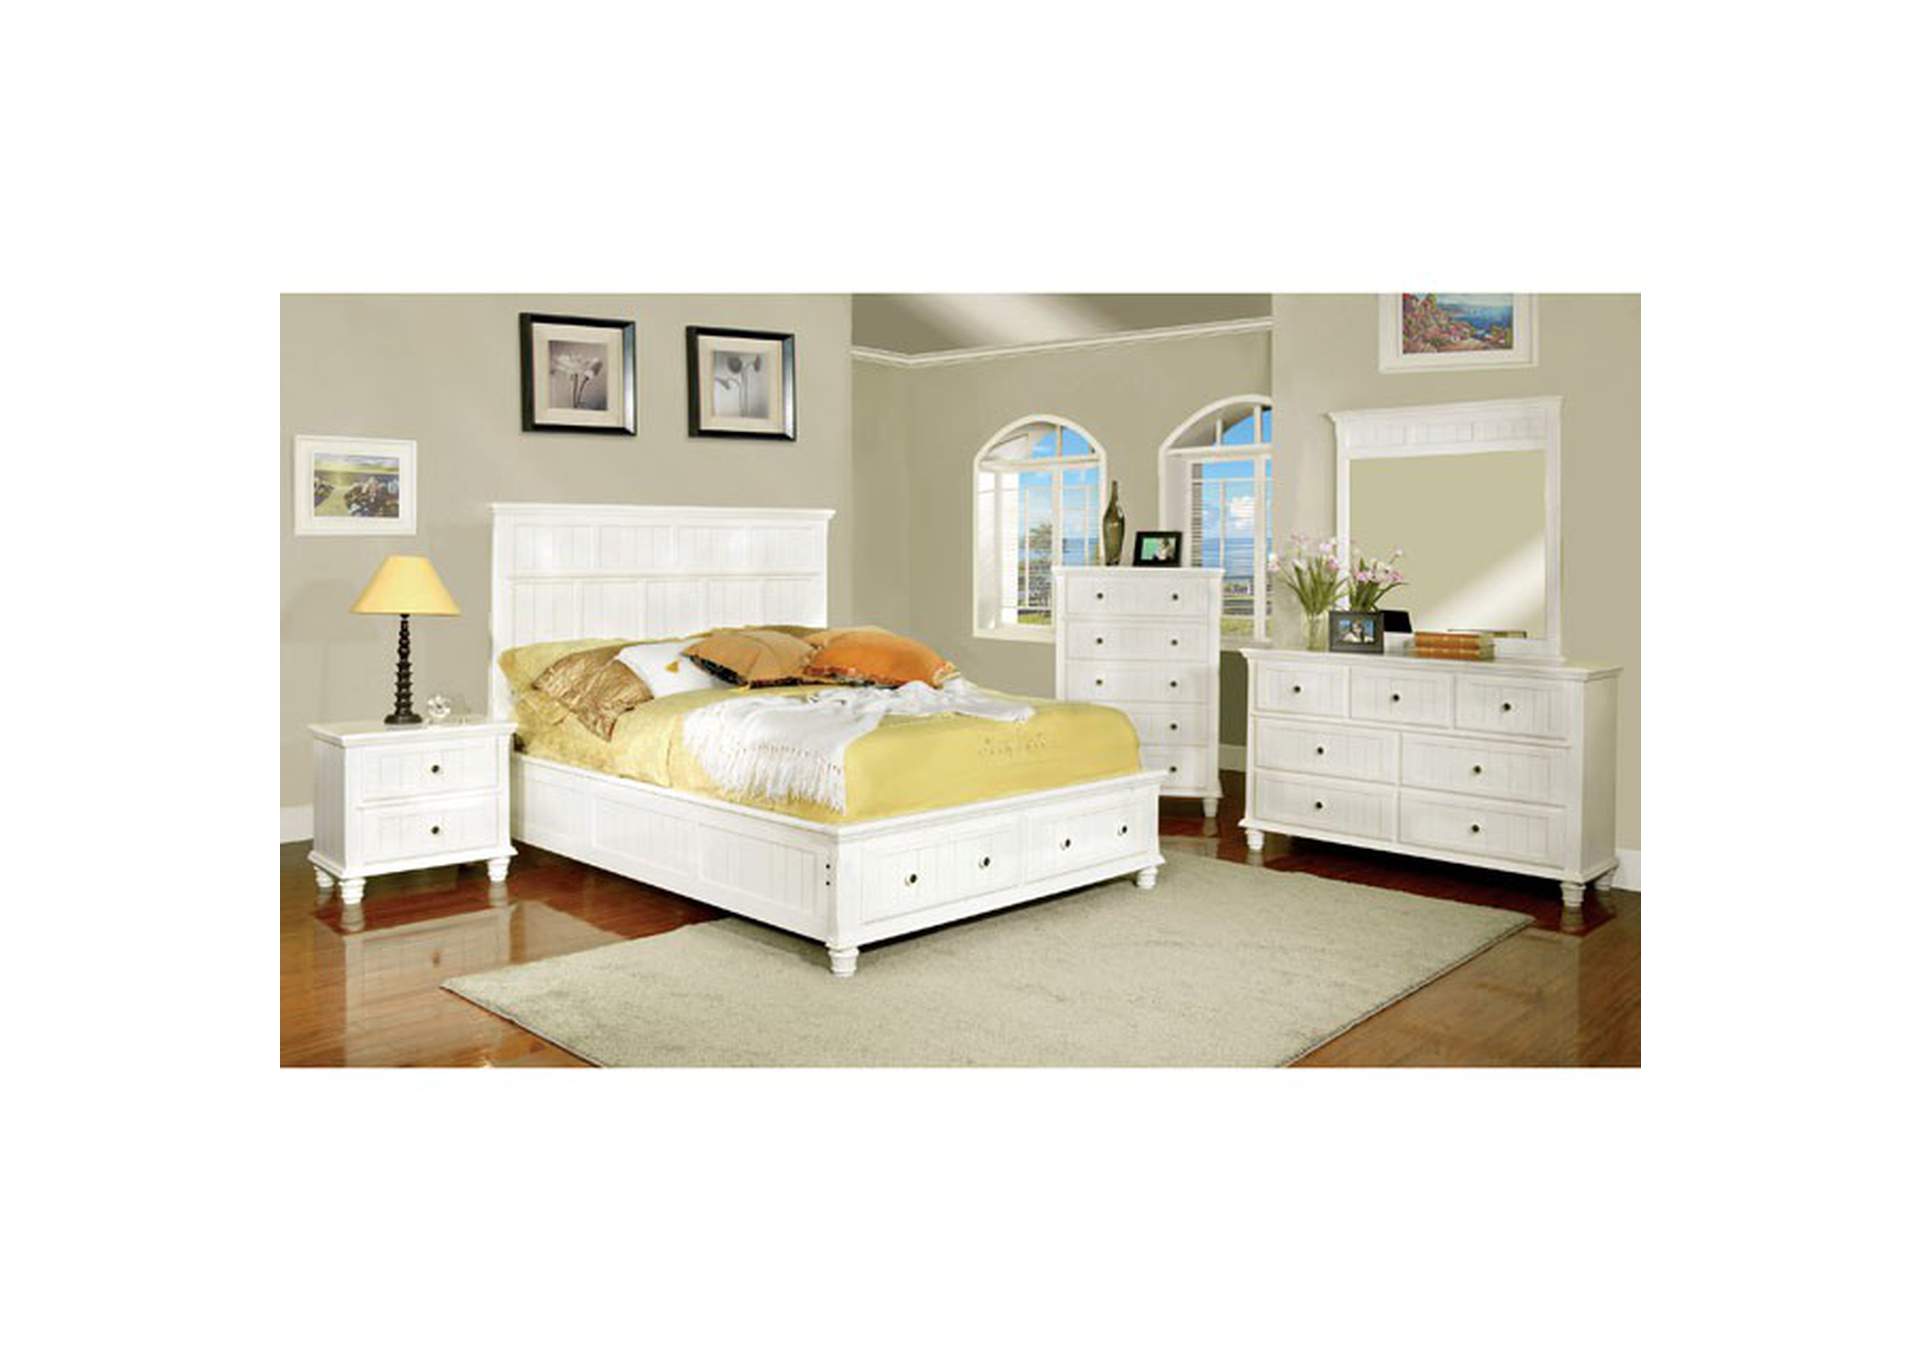 Willow Creek California King Bed,Furniture of America